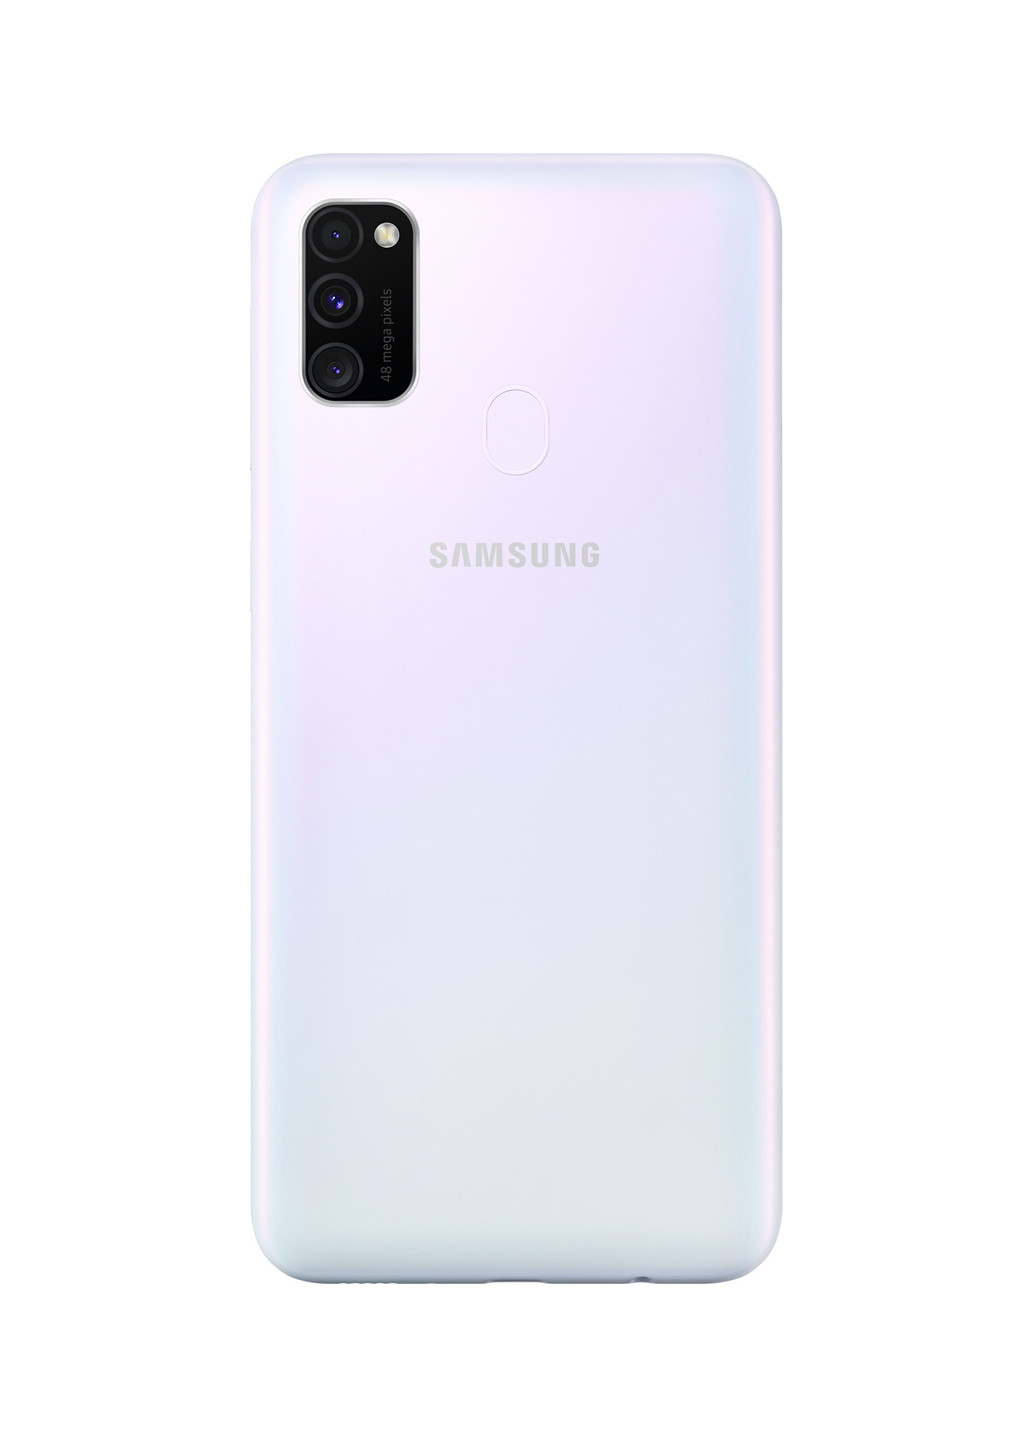 Смартфон Galaxy M30s 4 / 64GB Pearl White (SM-M307FZWUSEK) Samsung galaxy m30s 4/64gb pearl white (sm-m307fzwusek) (152569813)